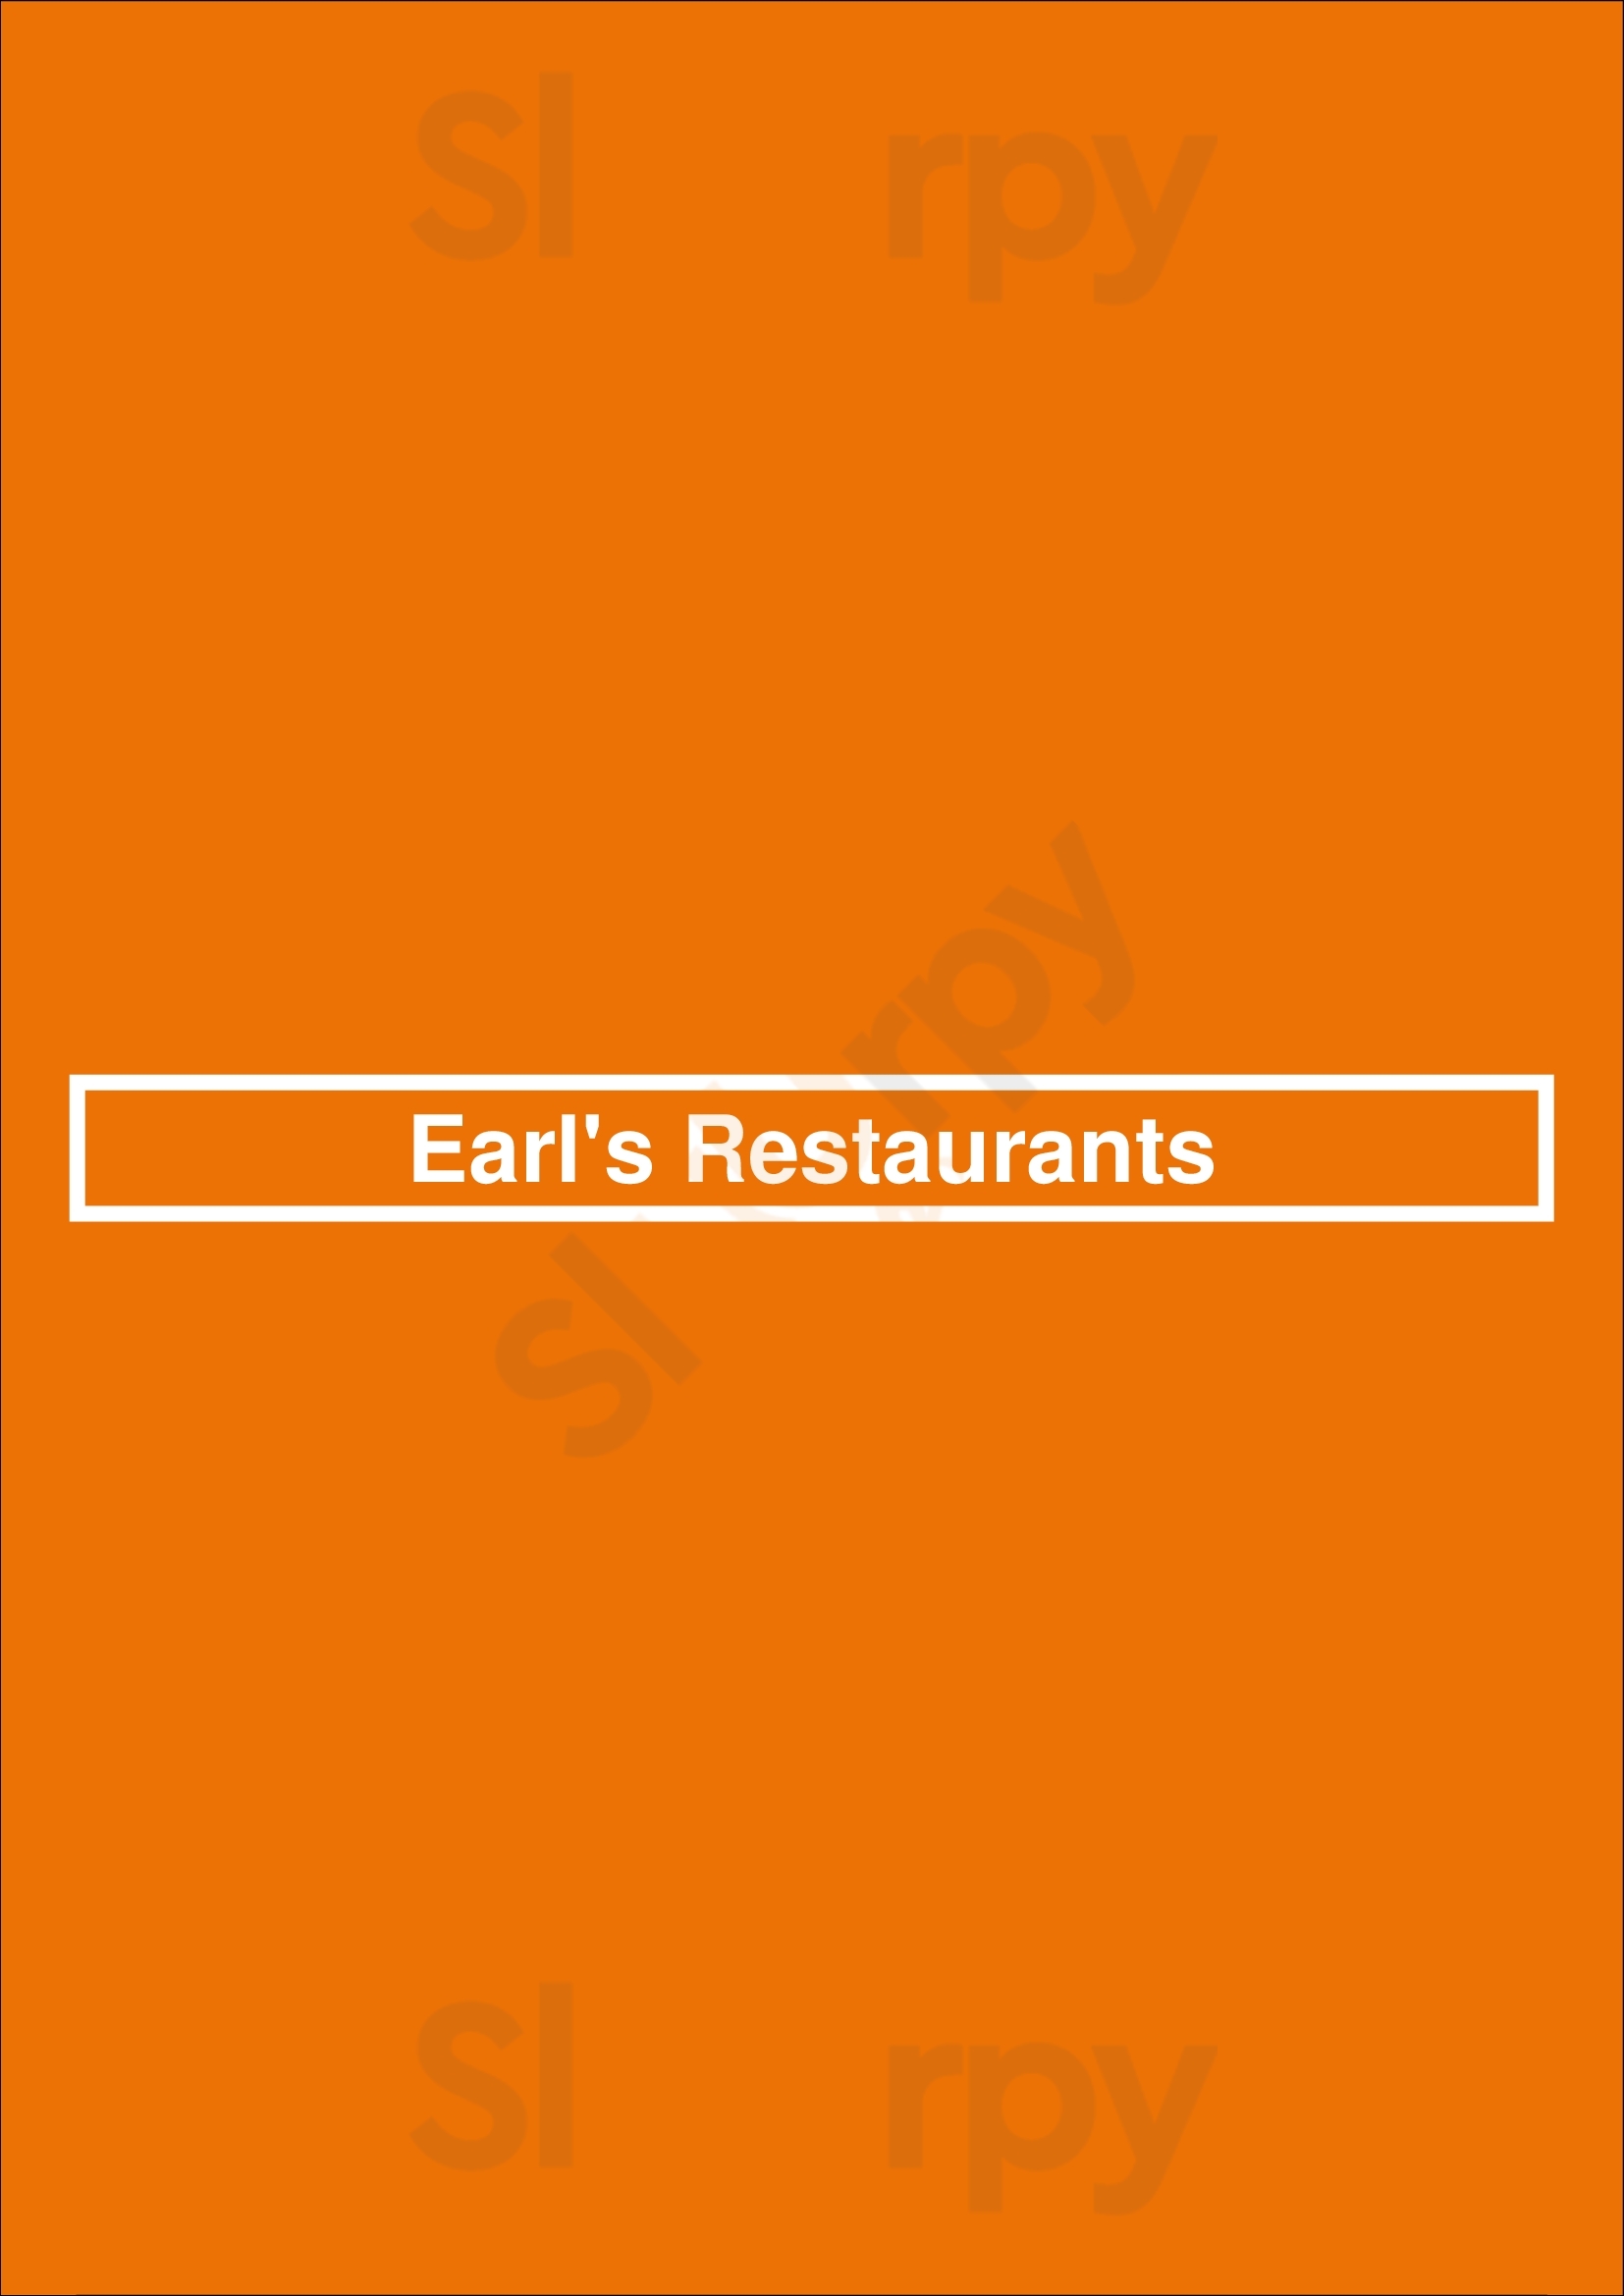 Earl's Restaurants Sherwood Park Menu - 1